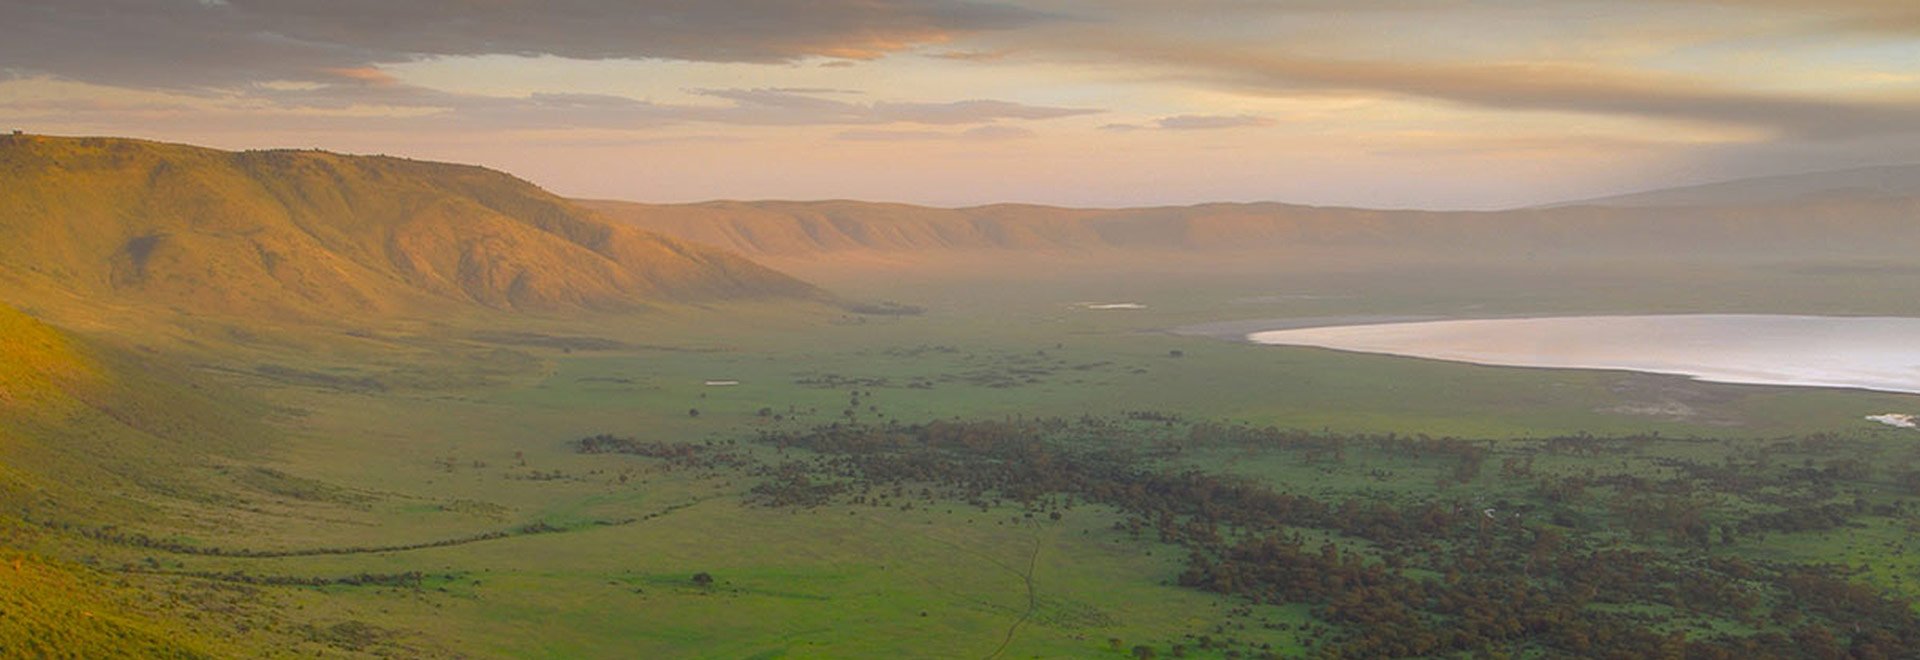 Africa Signature Tanzania Ngorongoro Crater MH